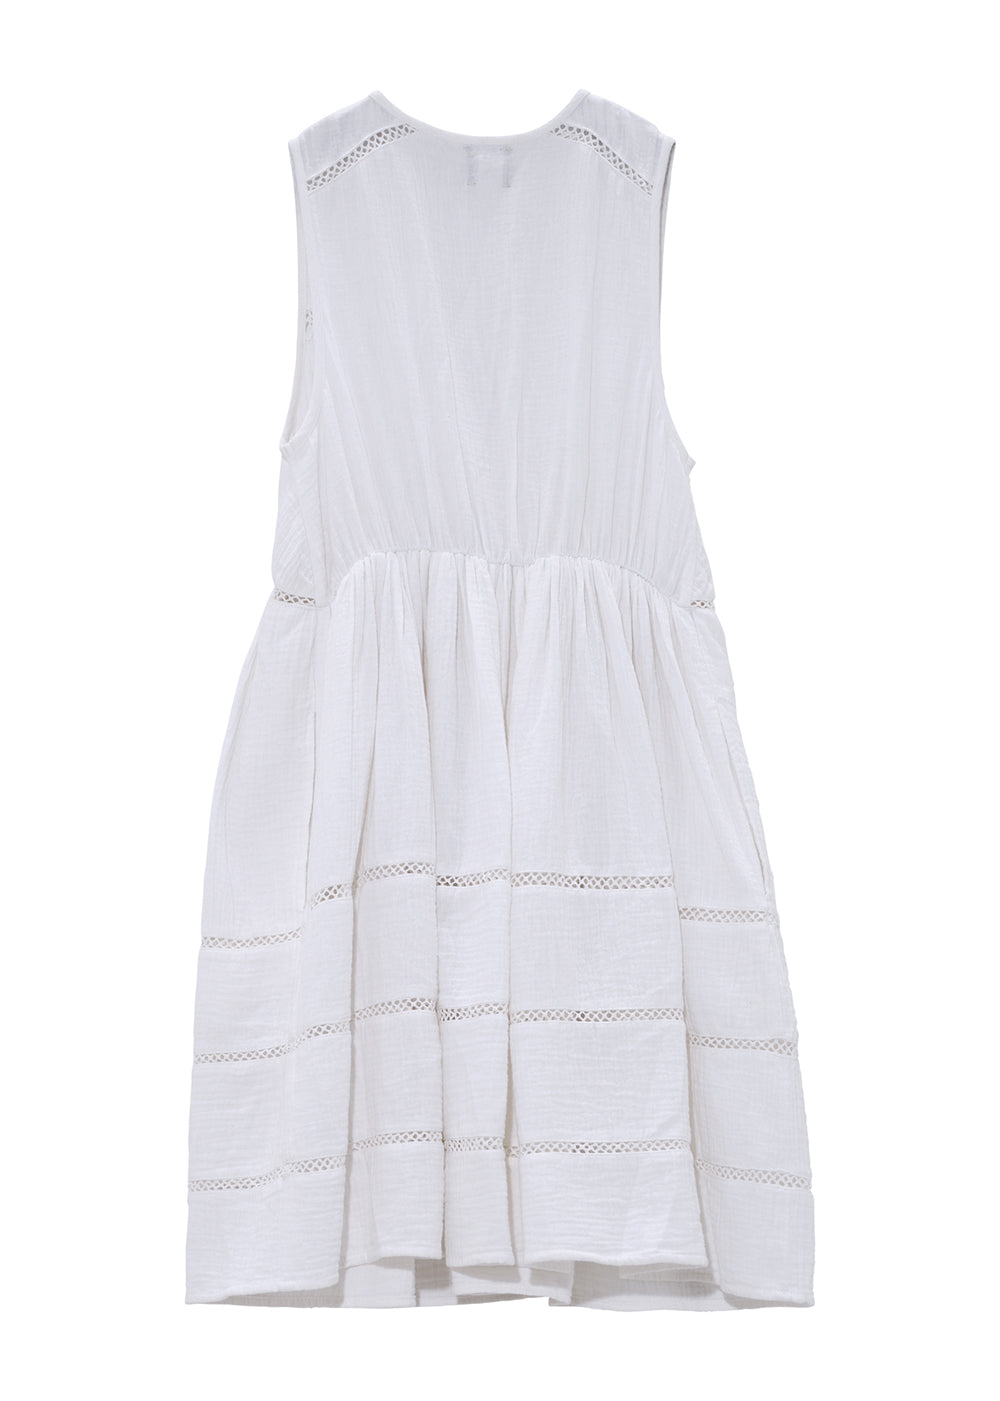 Supersoft Gauze Vesper Dress - White - Echo New York Canada - Danali - EB0409-100